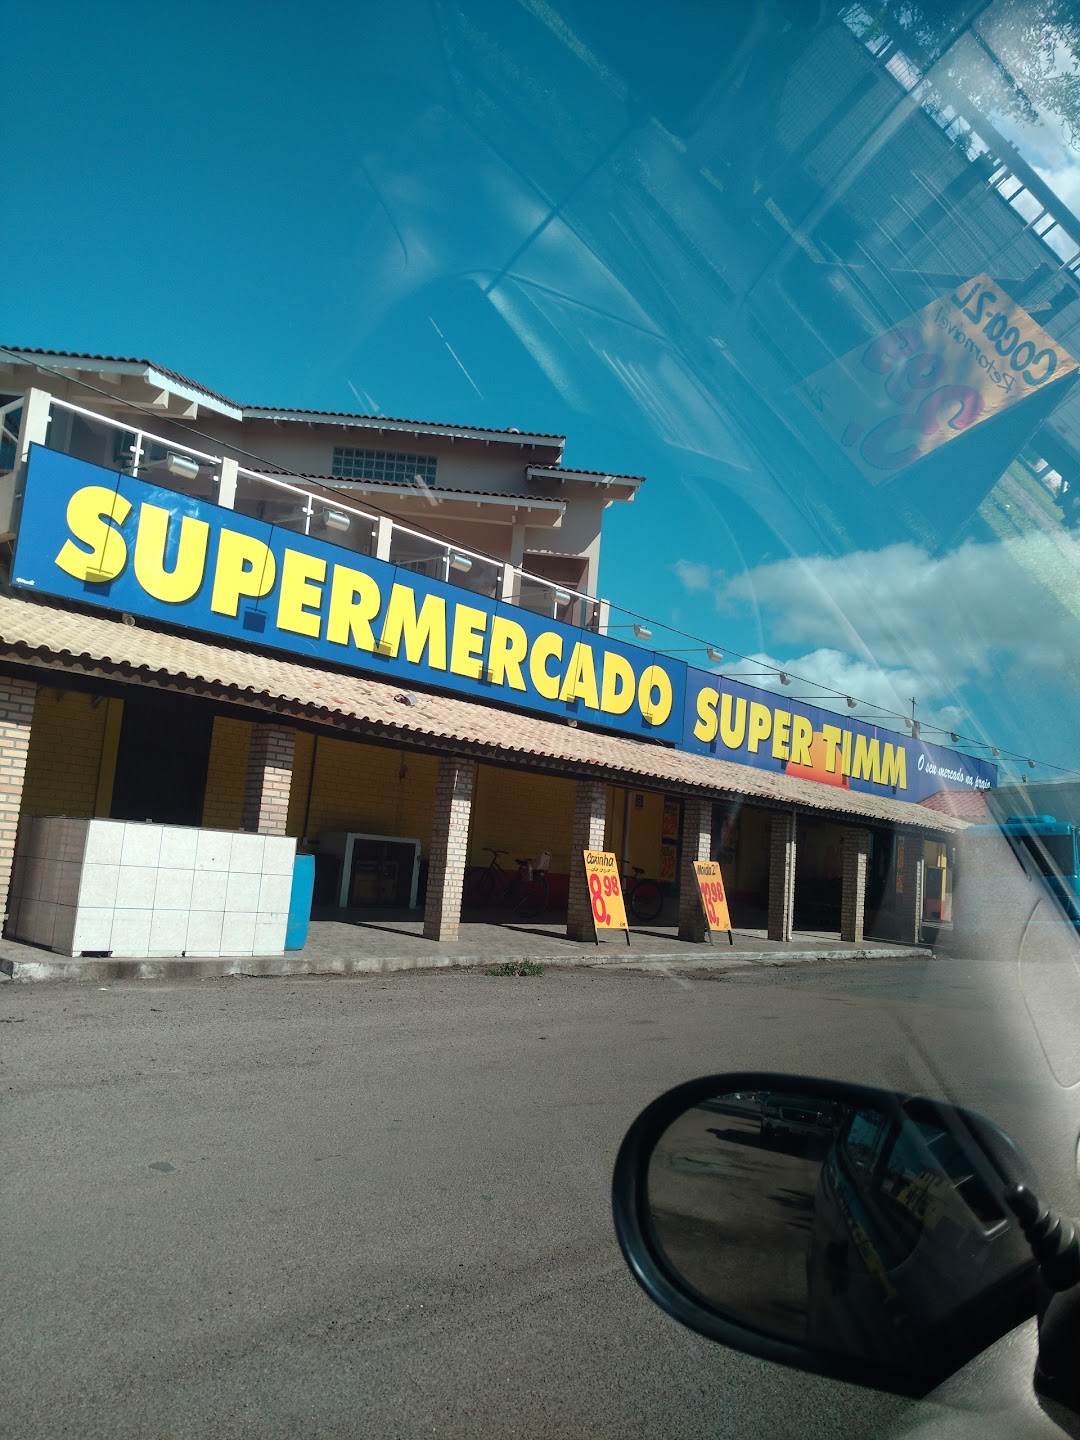 Supermercado Super Timm